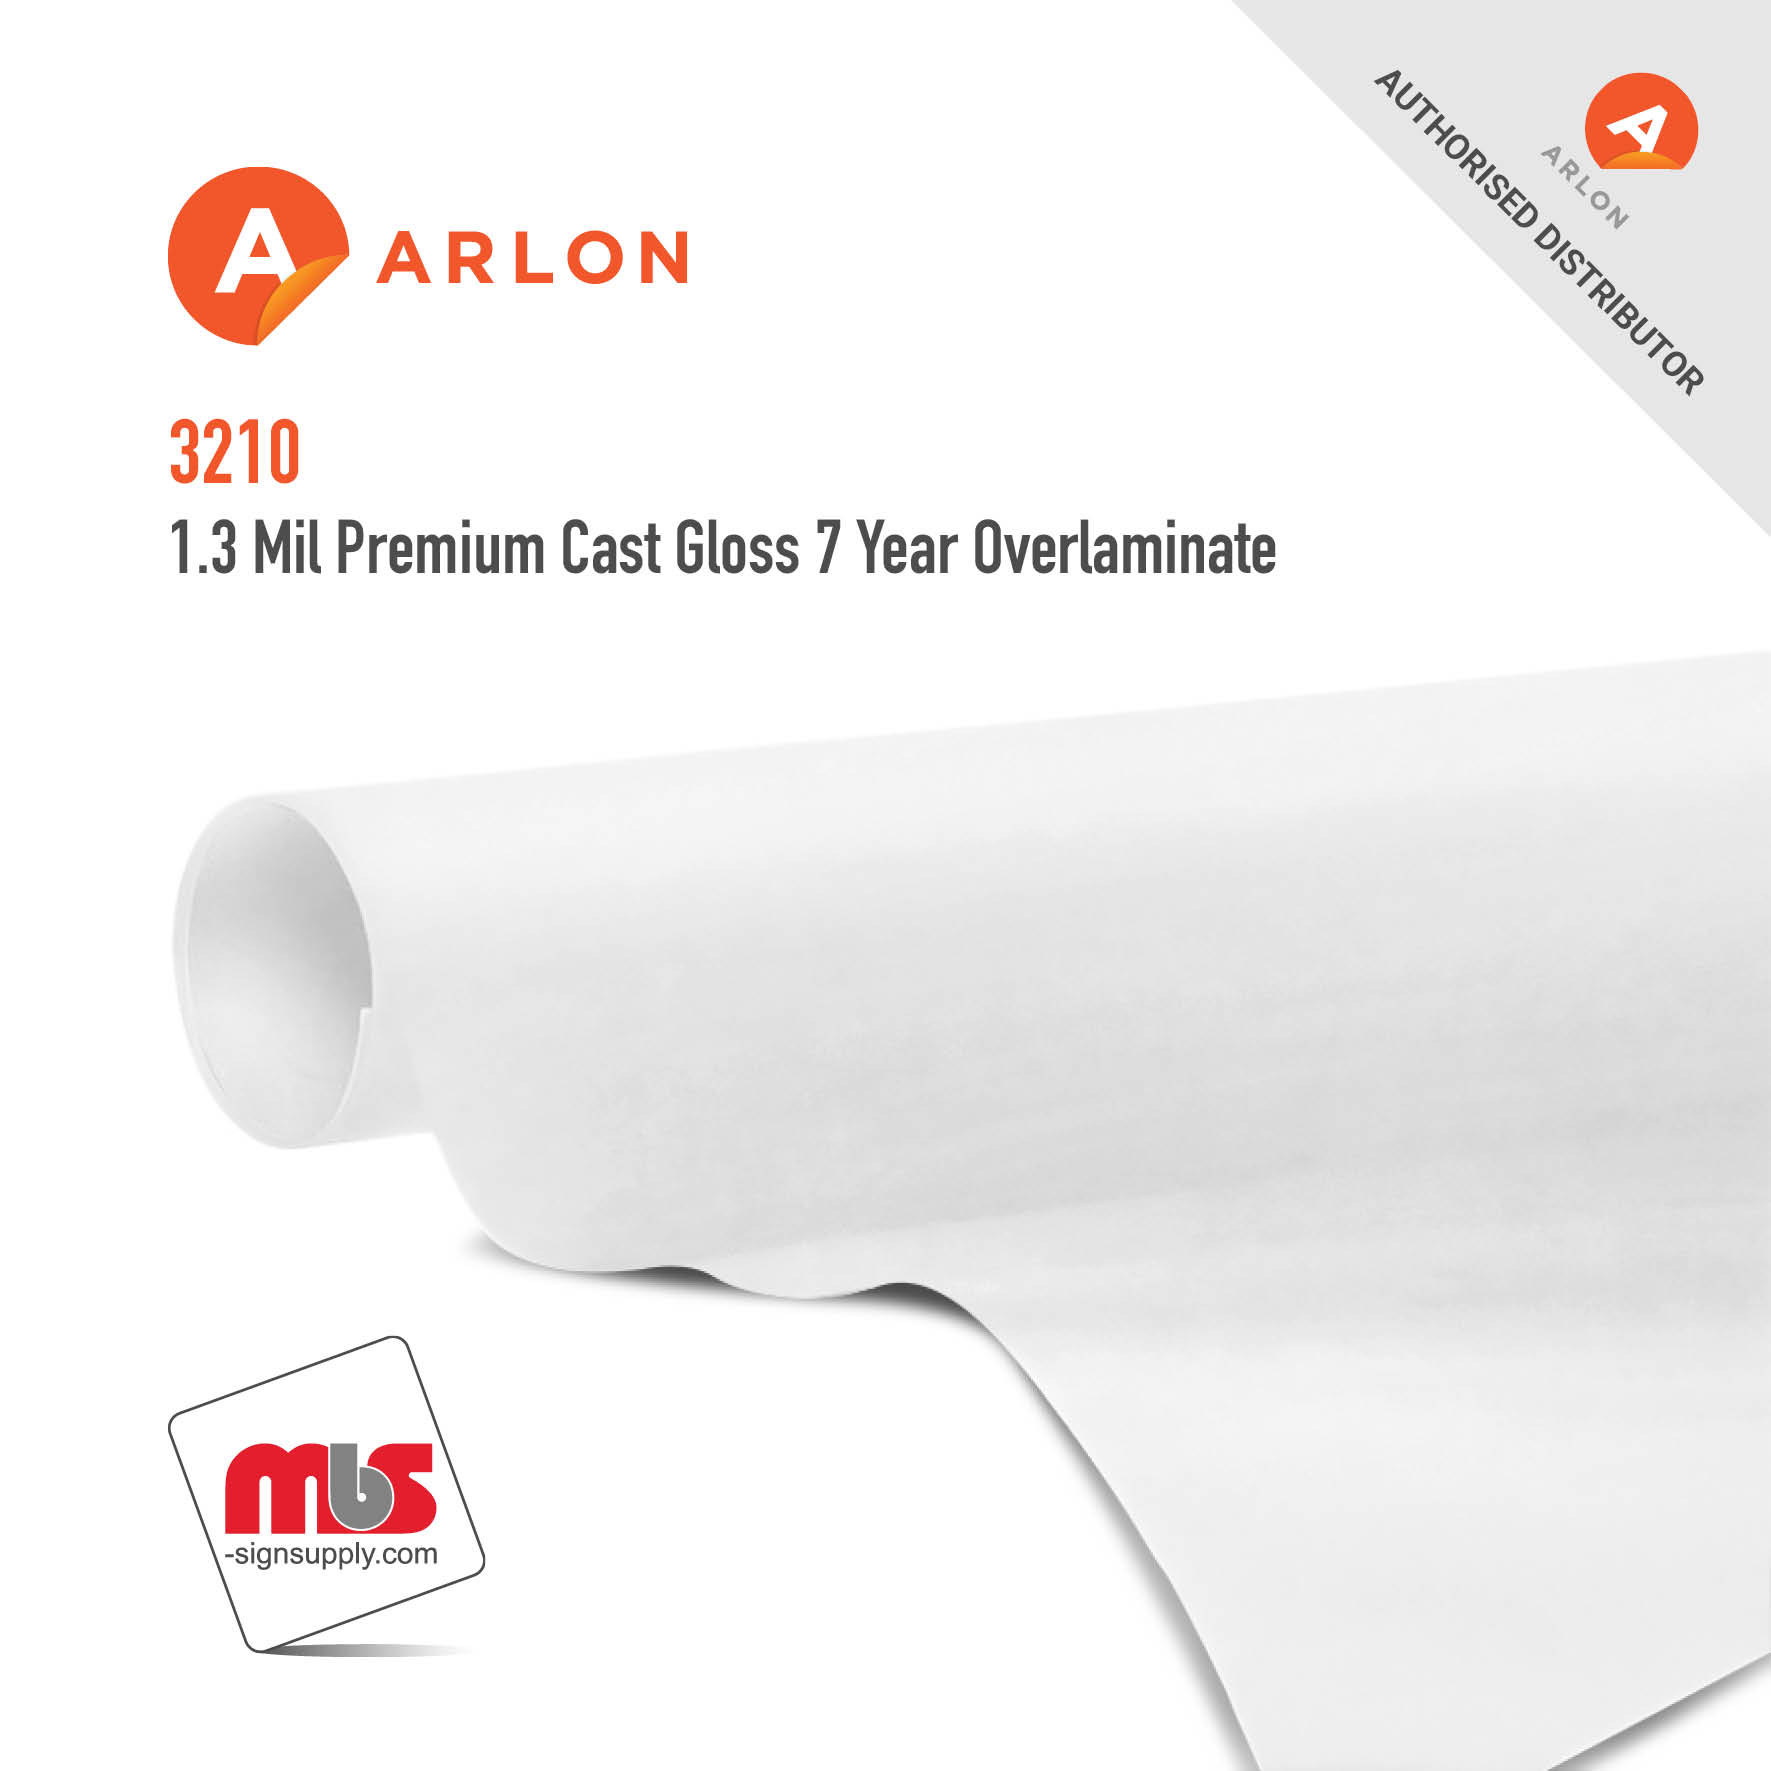 54'' x 25 Yard Roll - Arlon 3710 1.3 Mil Premium Cast Gloss 7 Year Overlaminate